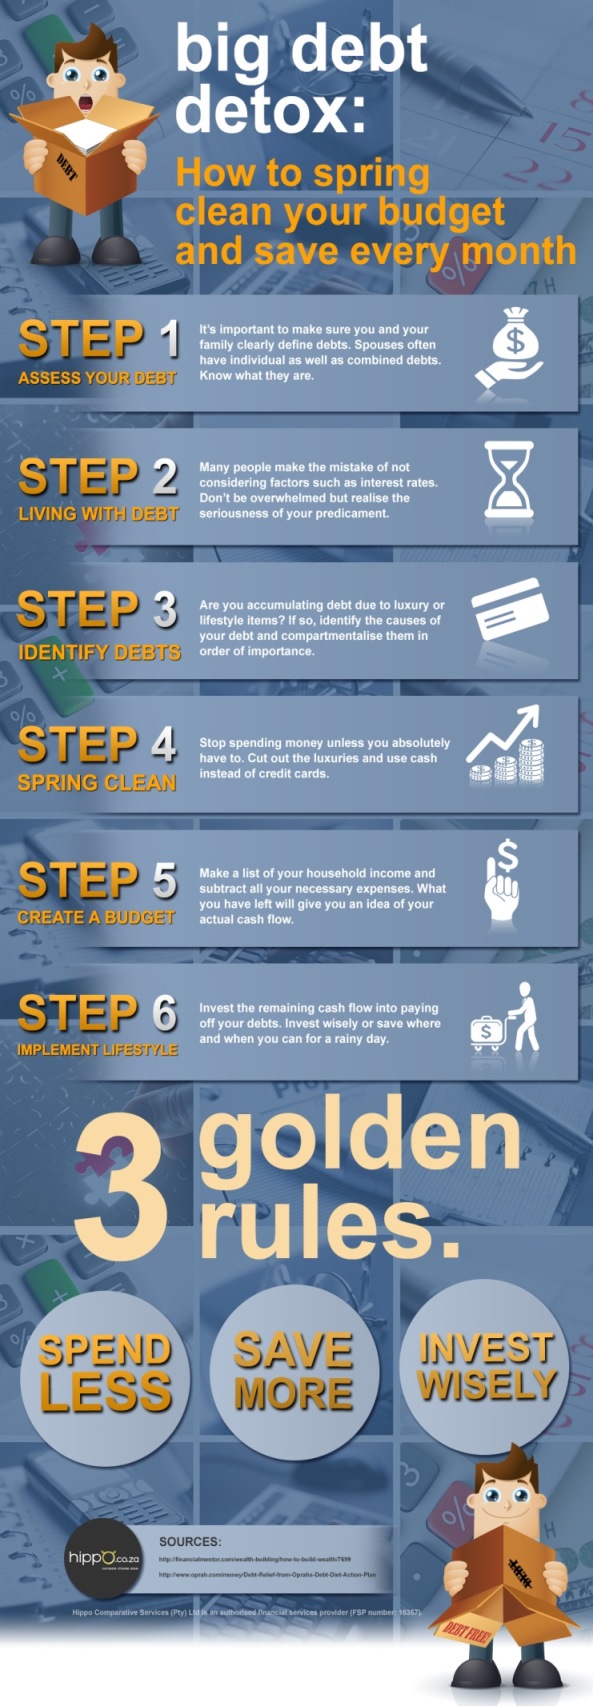 Debt detox golden rules